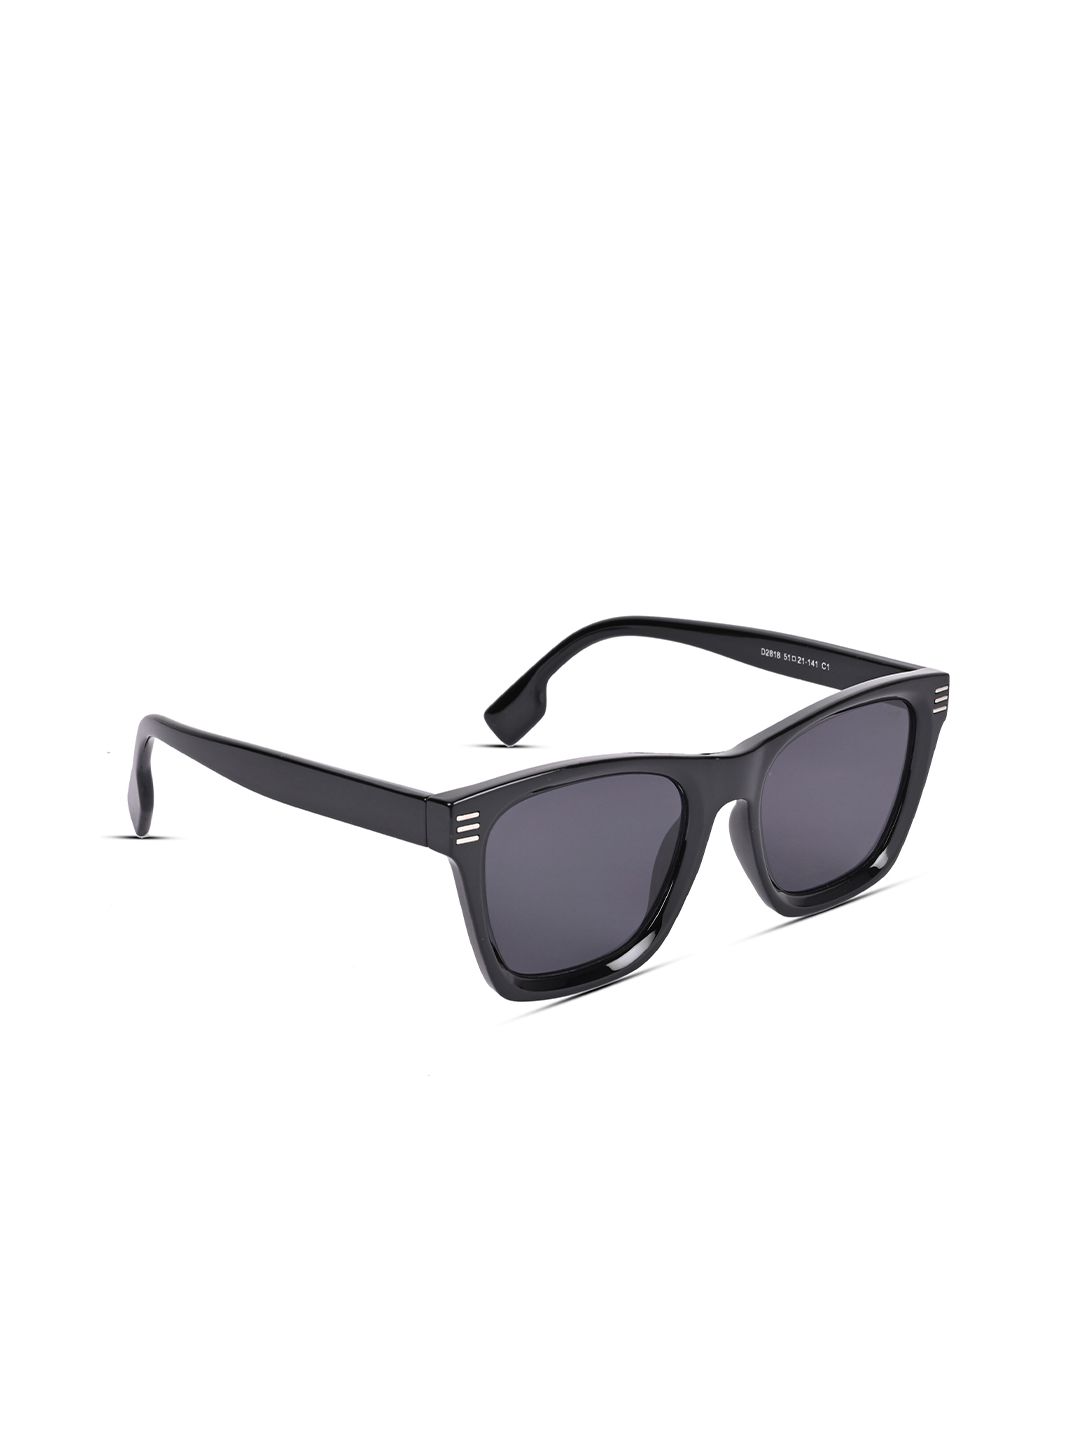 Voyage Unisex Black Lens & Black Wayfarer UV Protected Lens Sunglasses Price in India